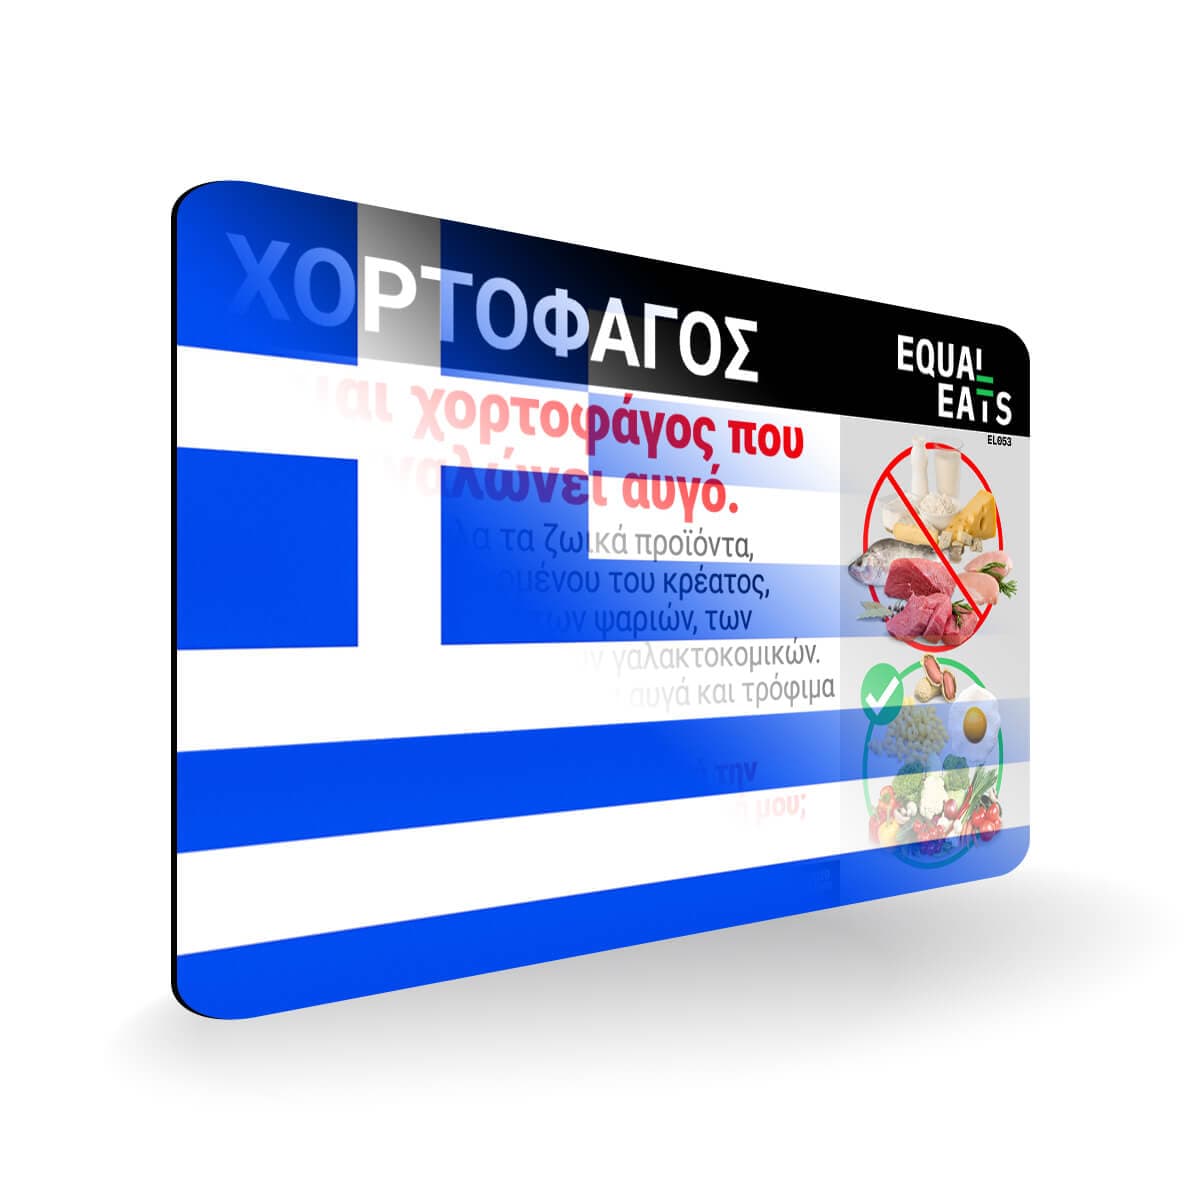 Ovo Vegetarian in Greek. Card for Vegetarian in Greece